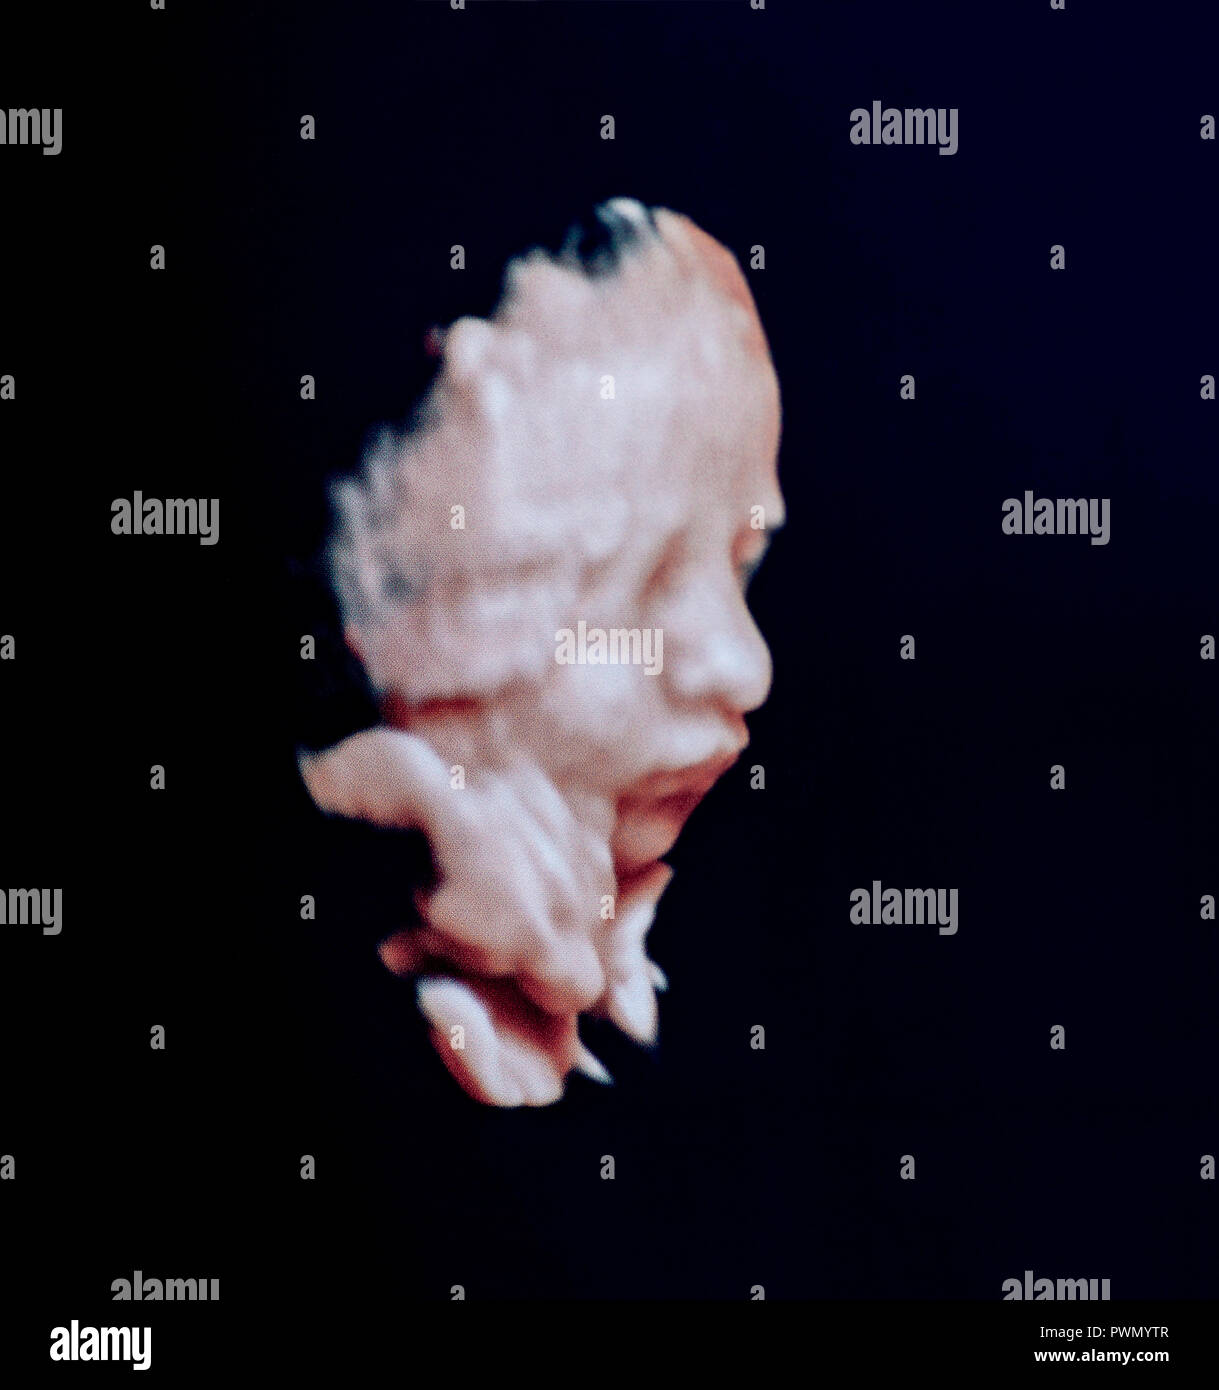 Ultra sound baby fotografías e imágenes de alta resolución - Alamy